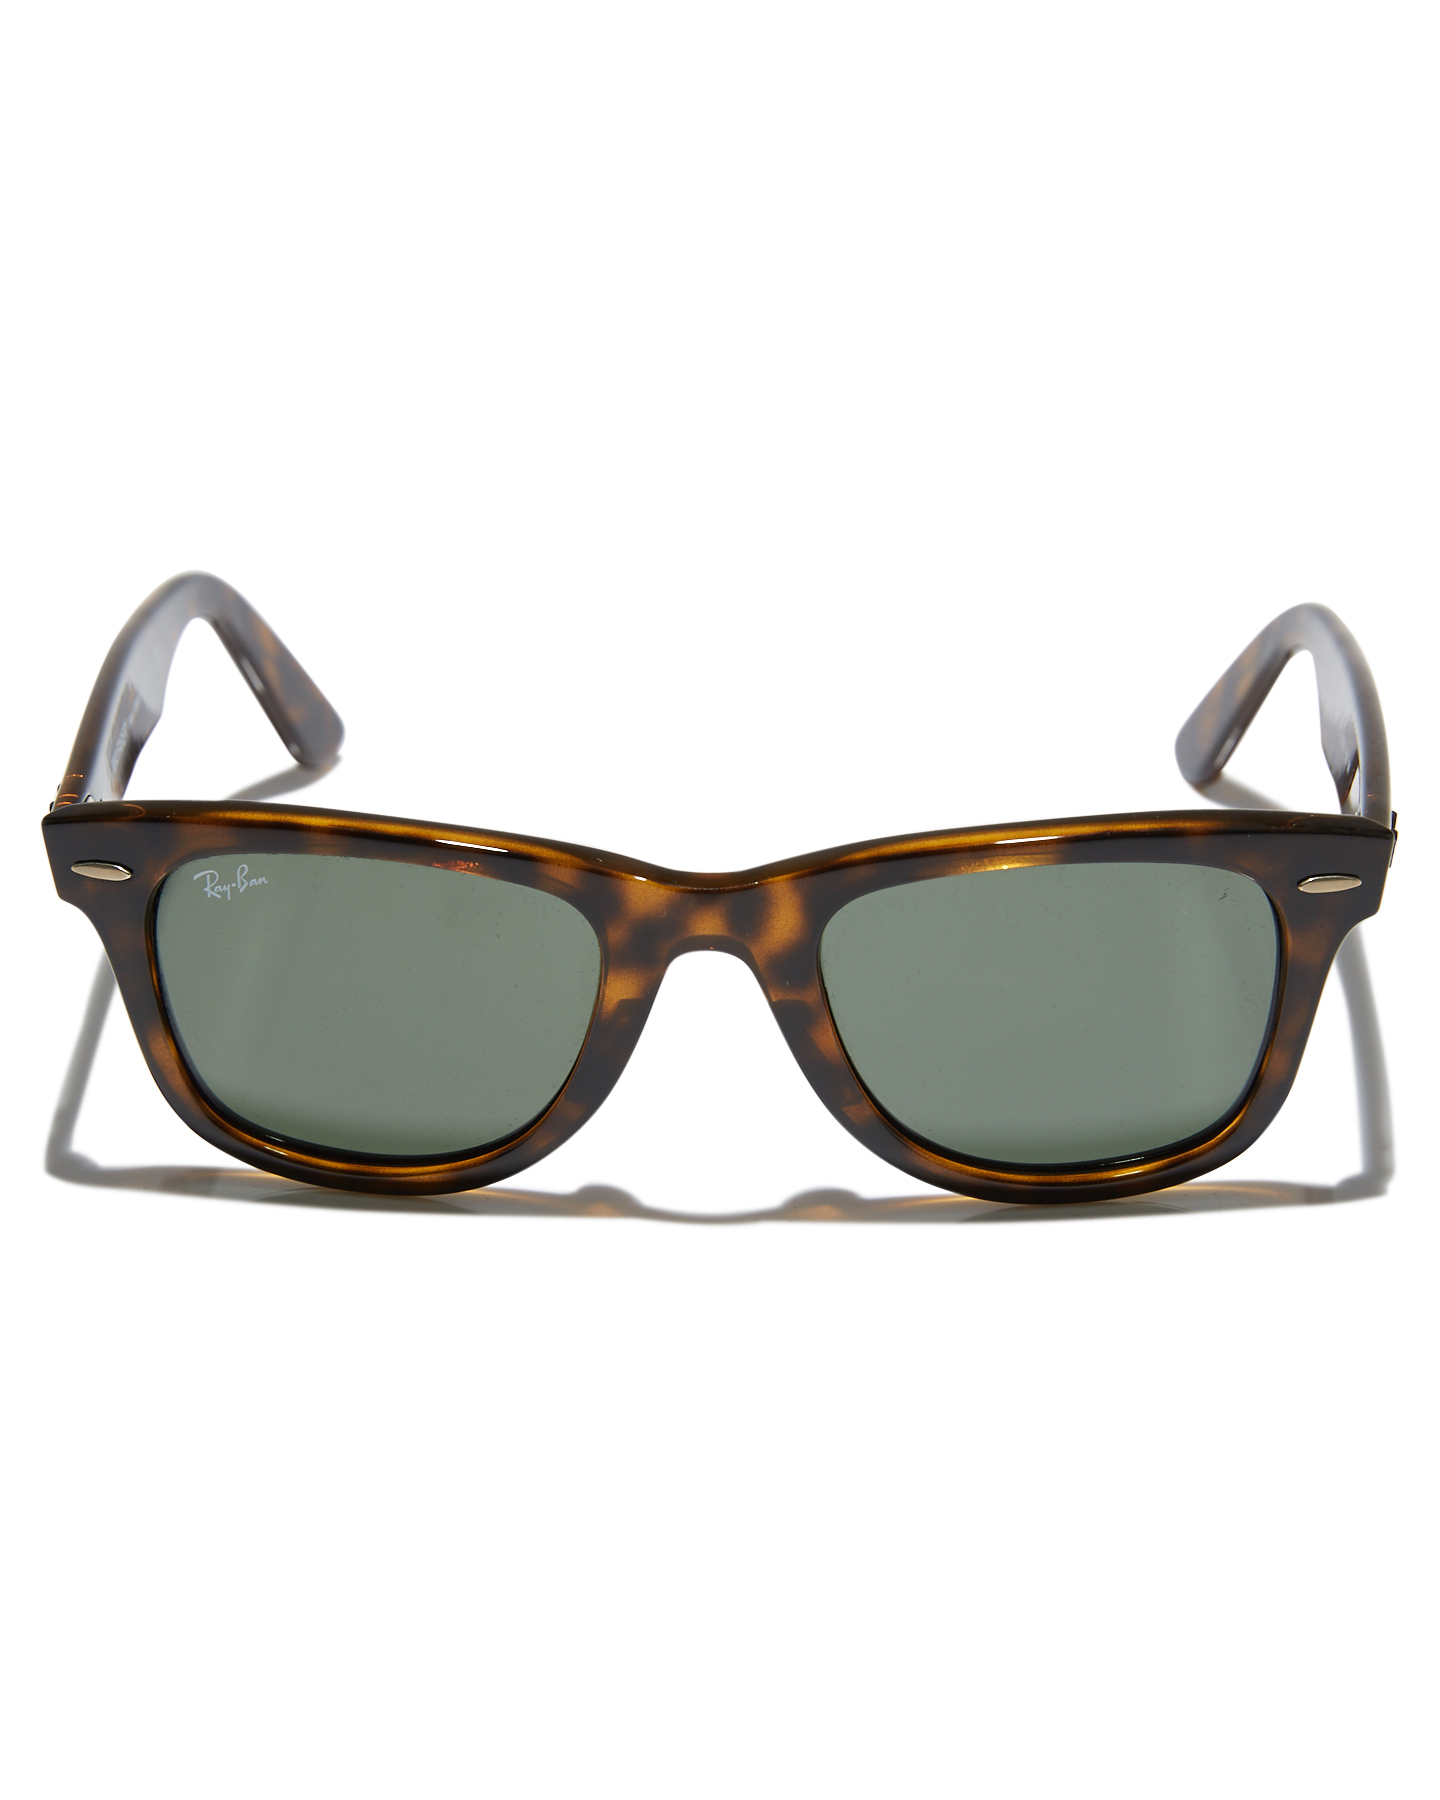 Ray-Ban New Original Wayfarer Sunglasses - Havana | SurfStitch